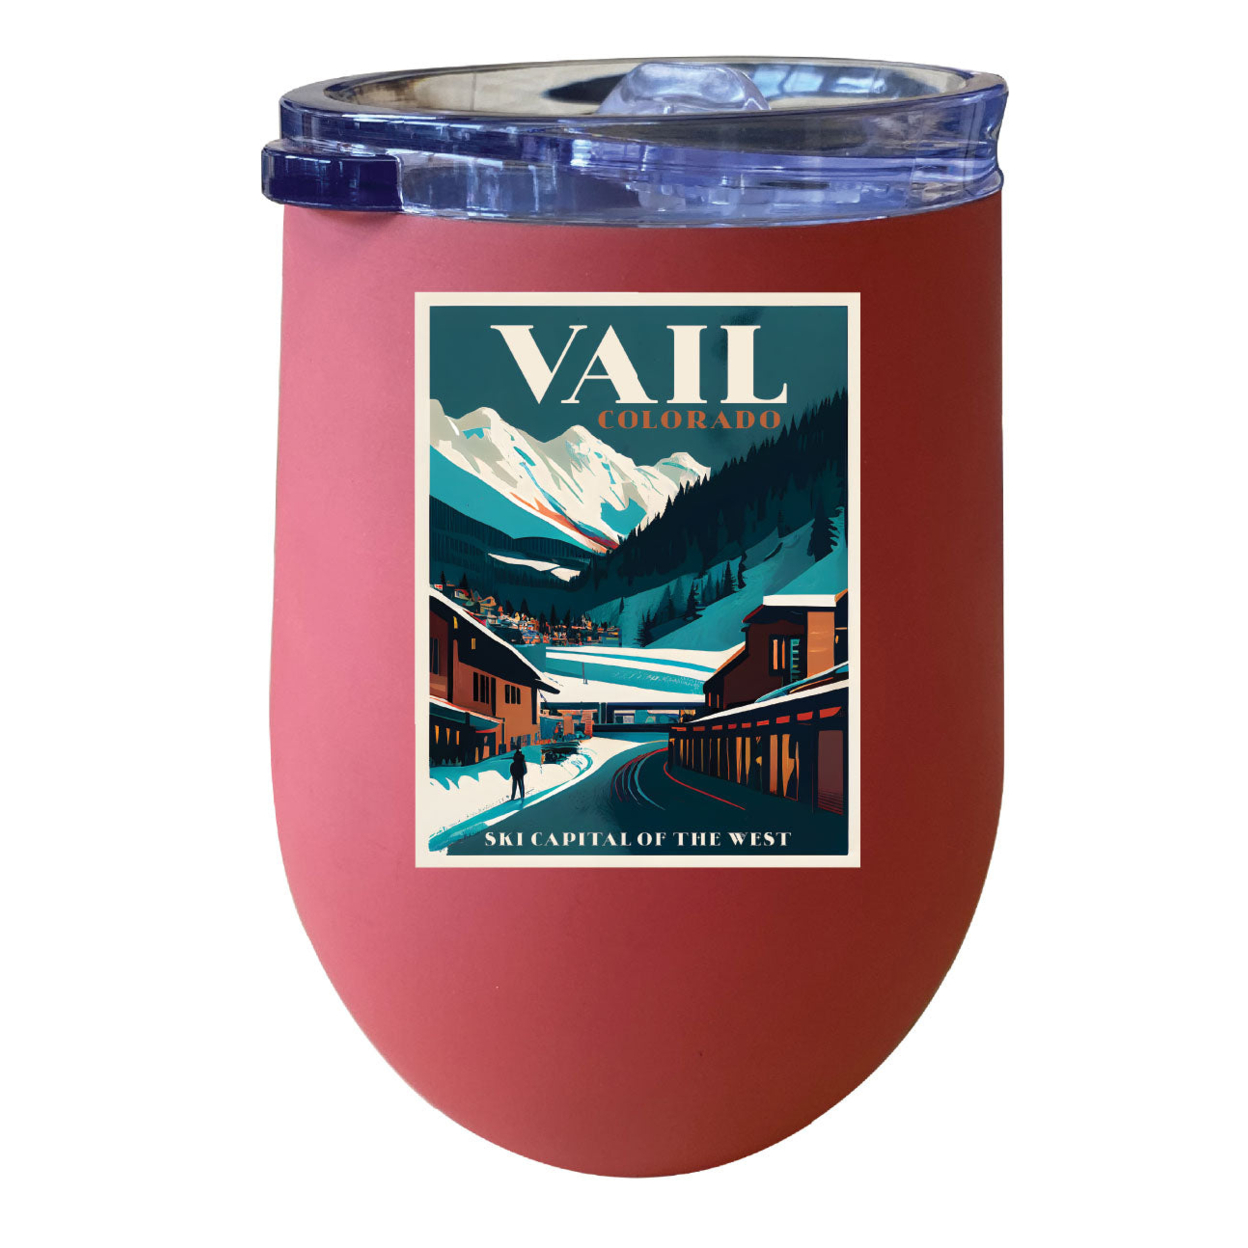 Vail Colorado Souvenir 12 Oz Insulated Wine Stainless Steel Tumbler - Purple